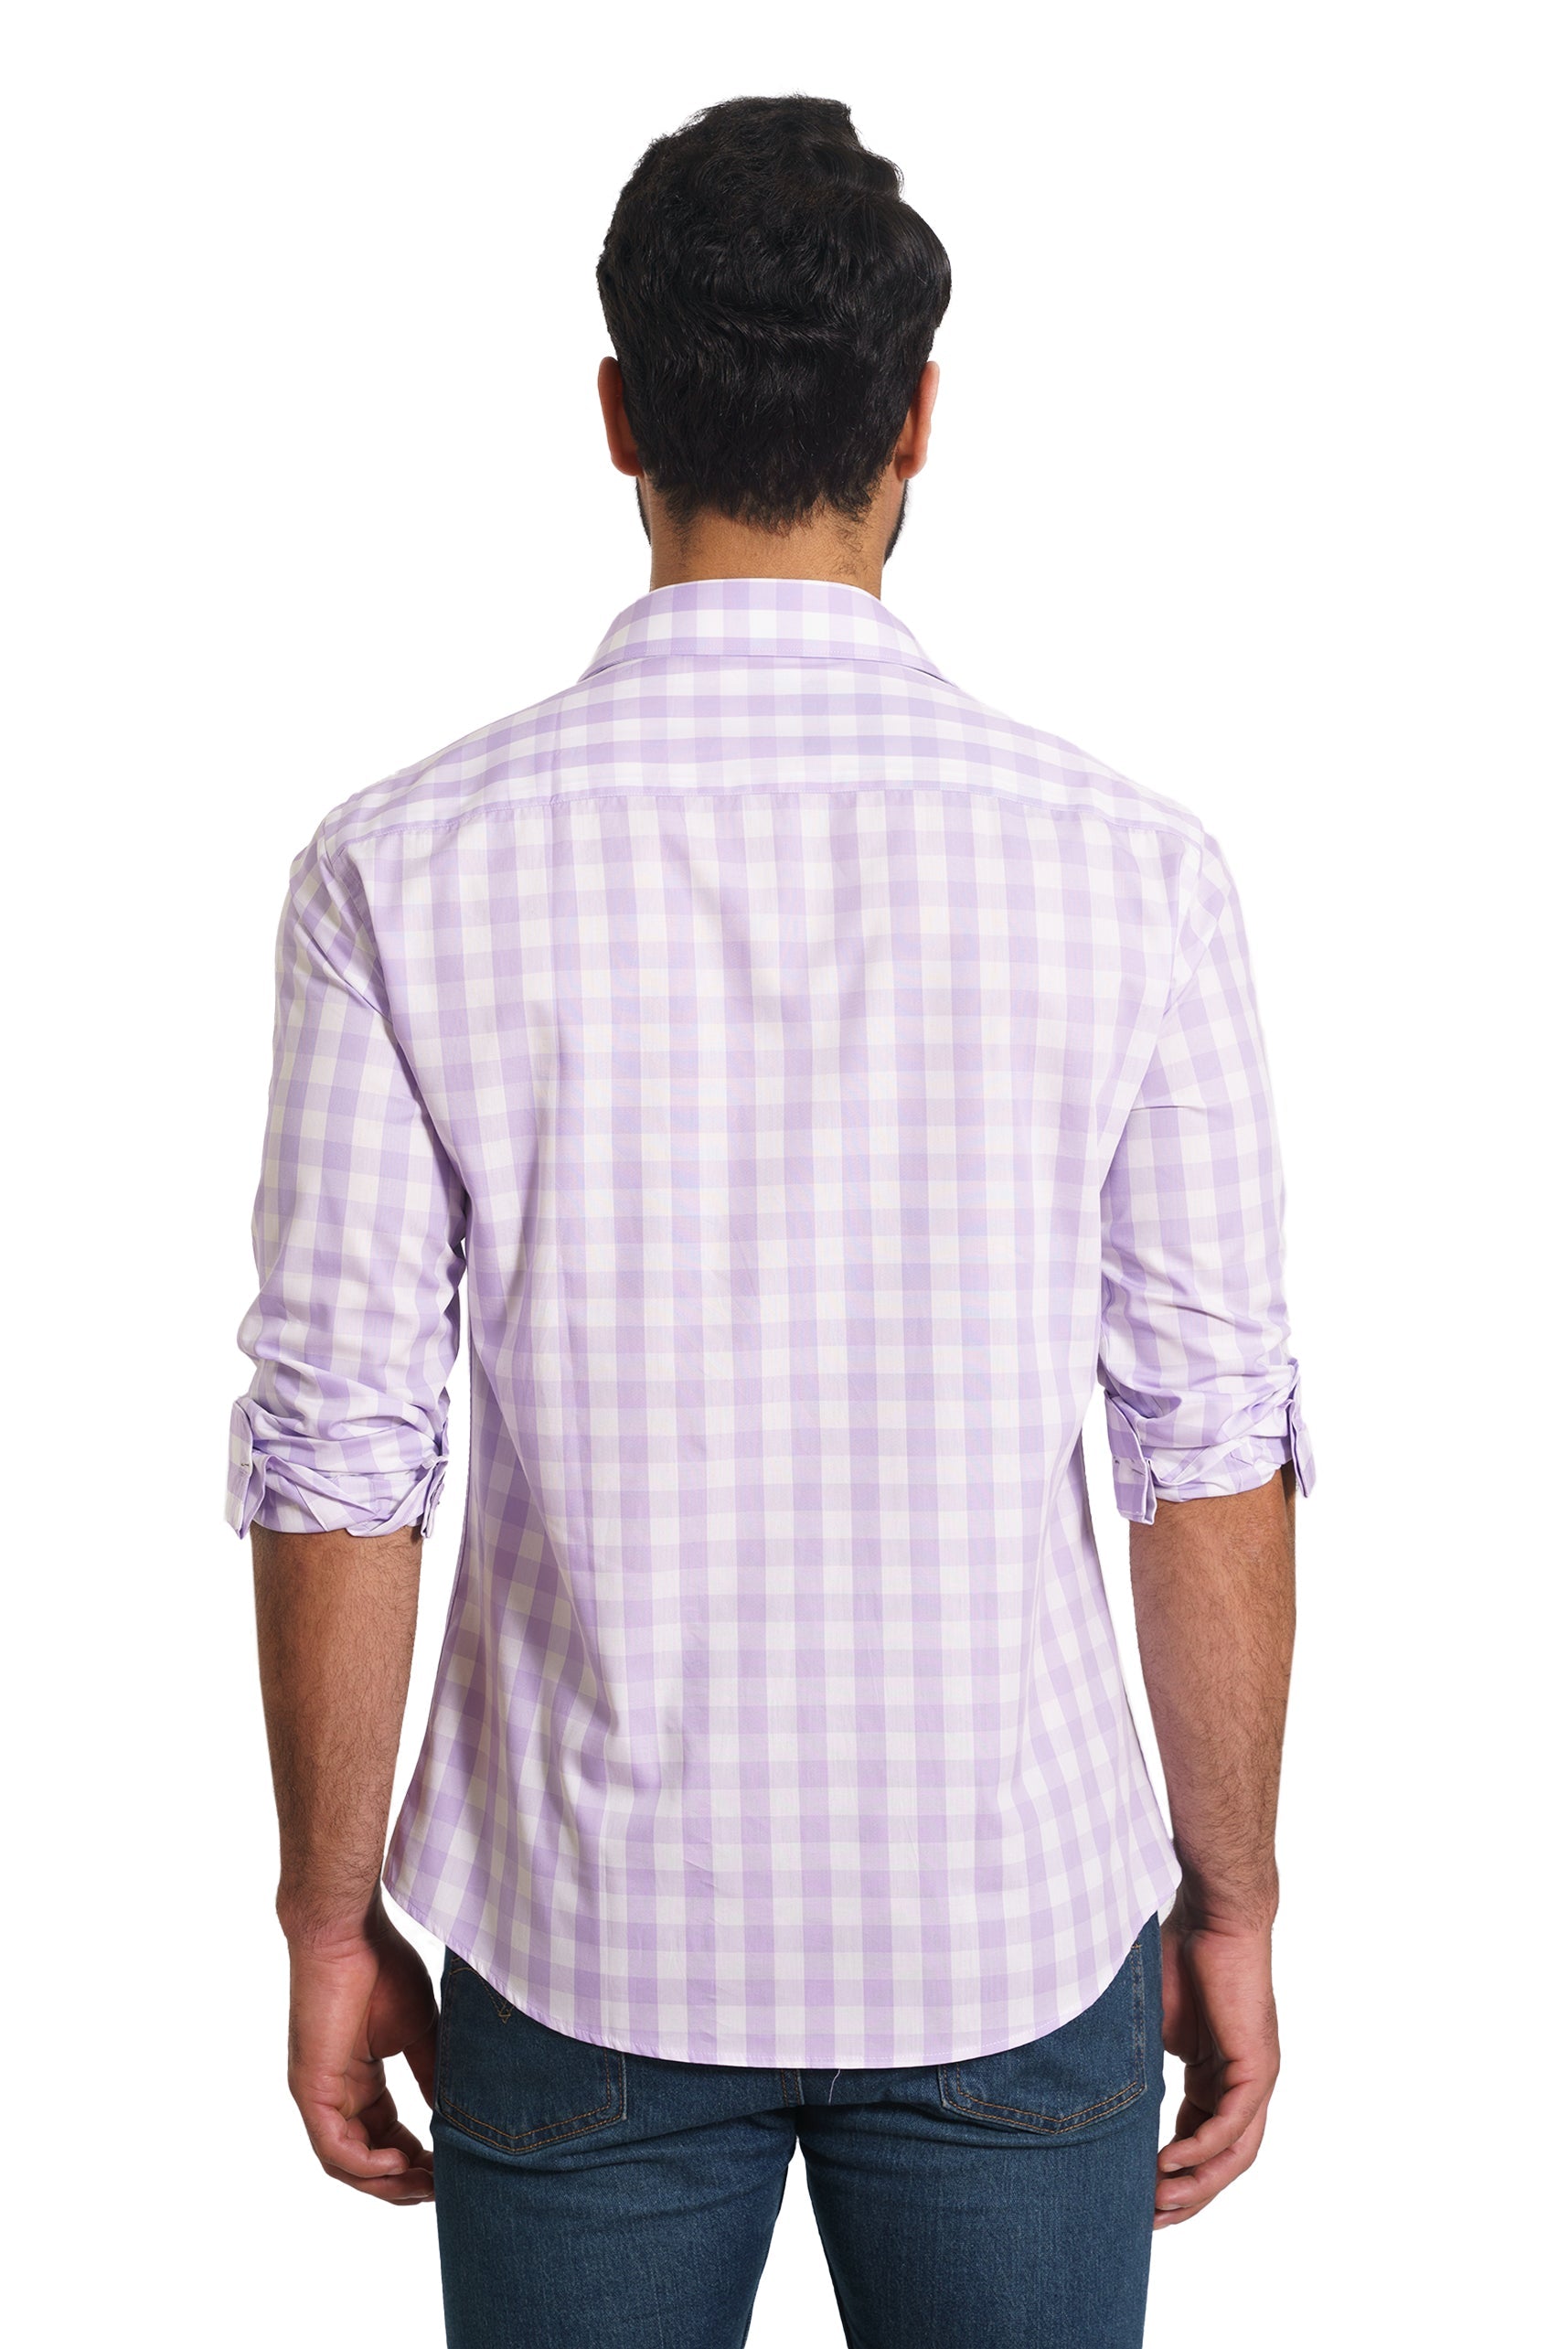 White Purple Check Long Sleeve Shirt TH-2856 Back